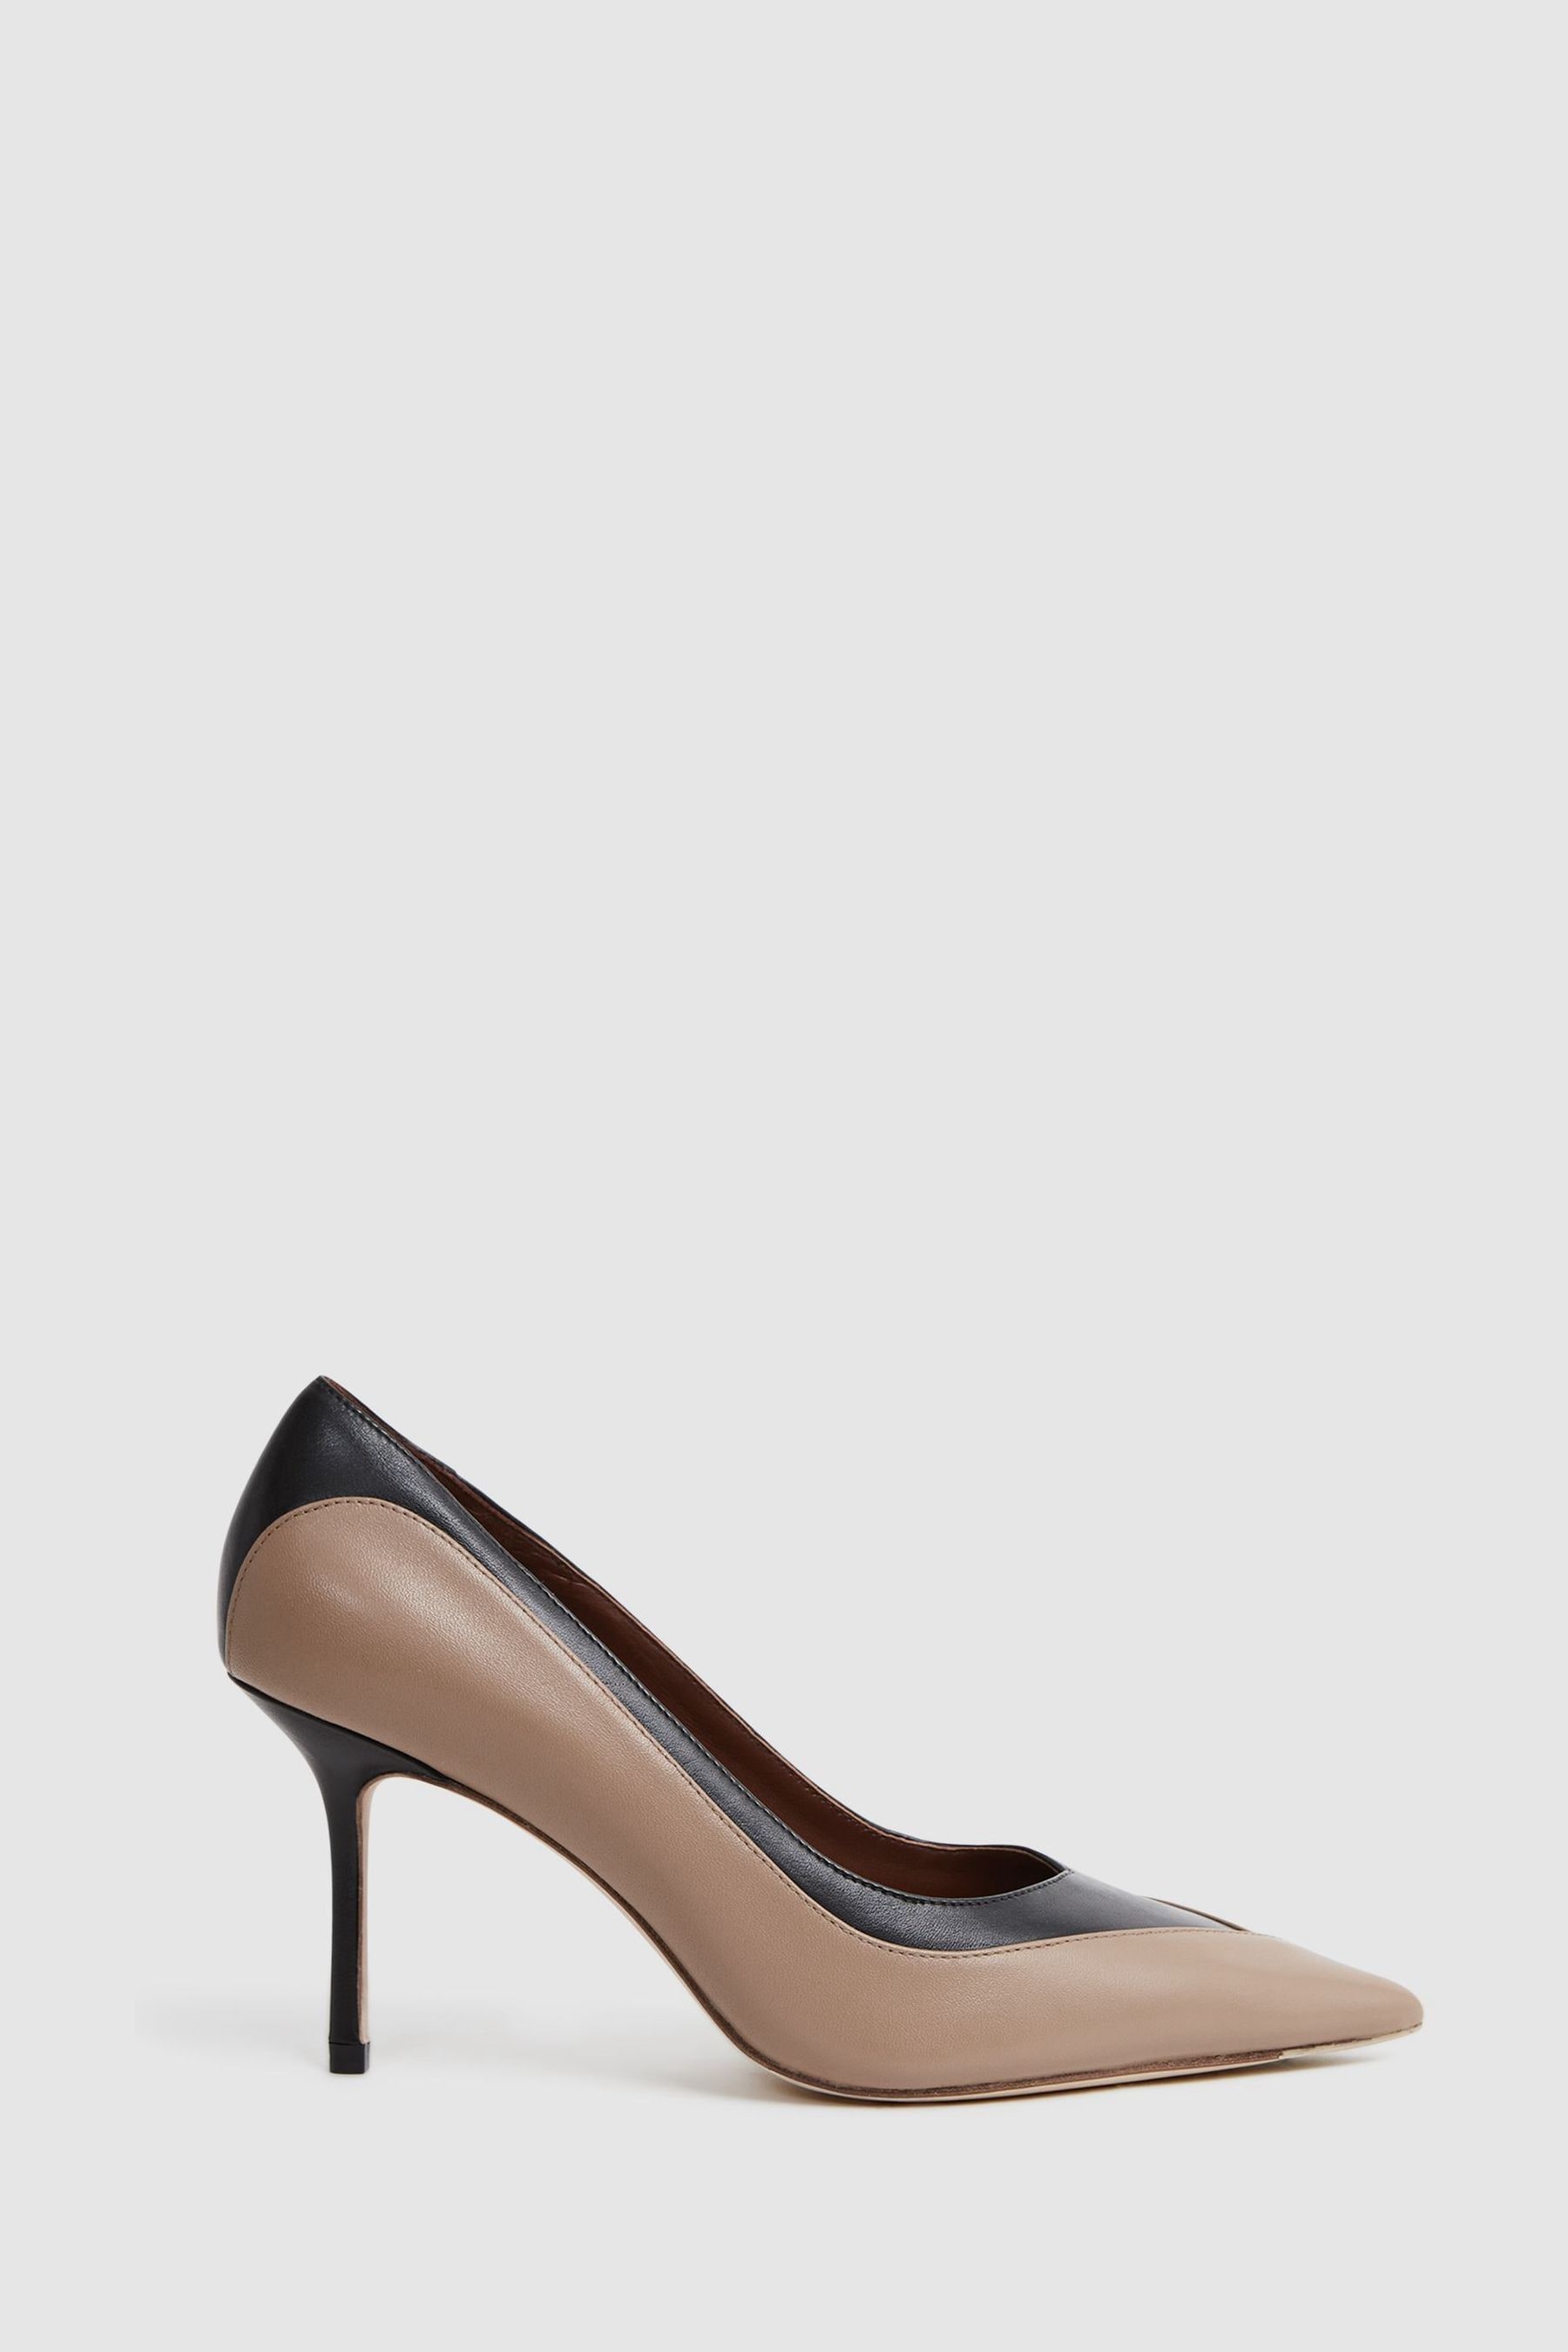 Reiss Gwyneth - Camel/black Leather Contrast Court Shoes, Uk 7 Eu 40